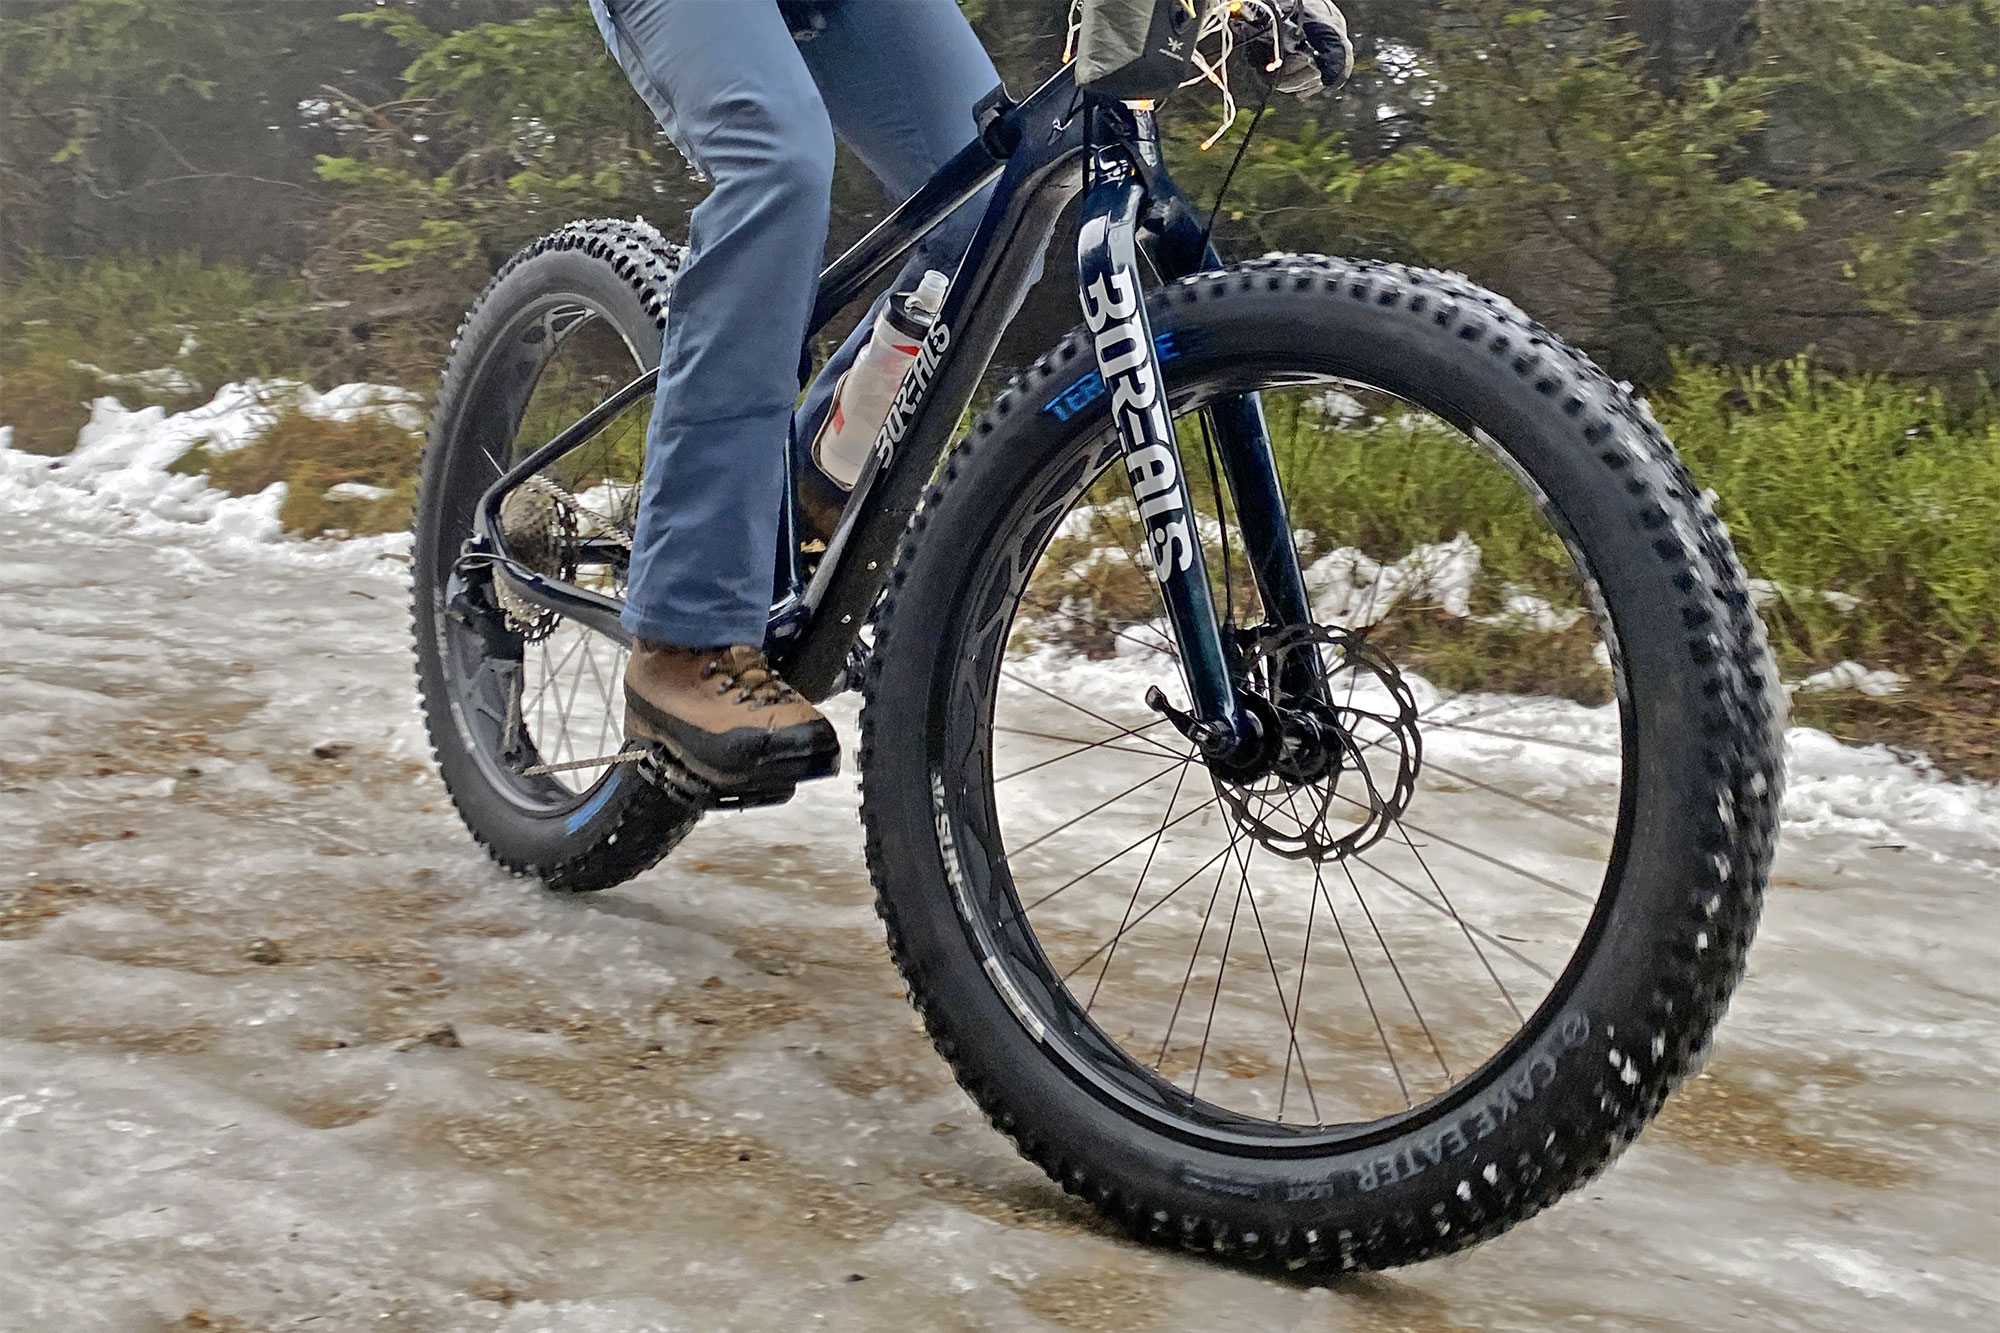 Borealis Crestone fatbike Review: benchmark lightweight carbon fat bike long-term test, riding